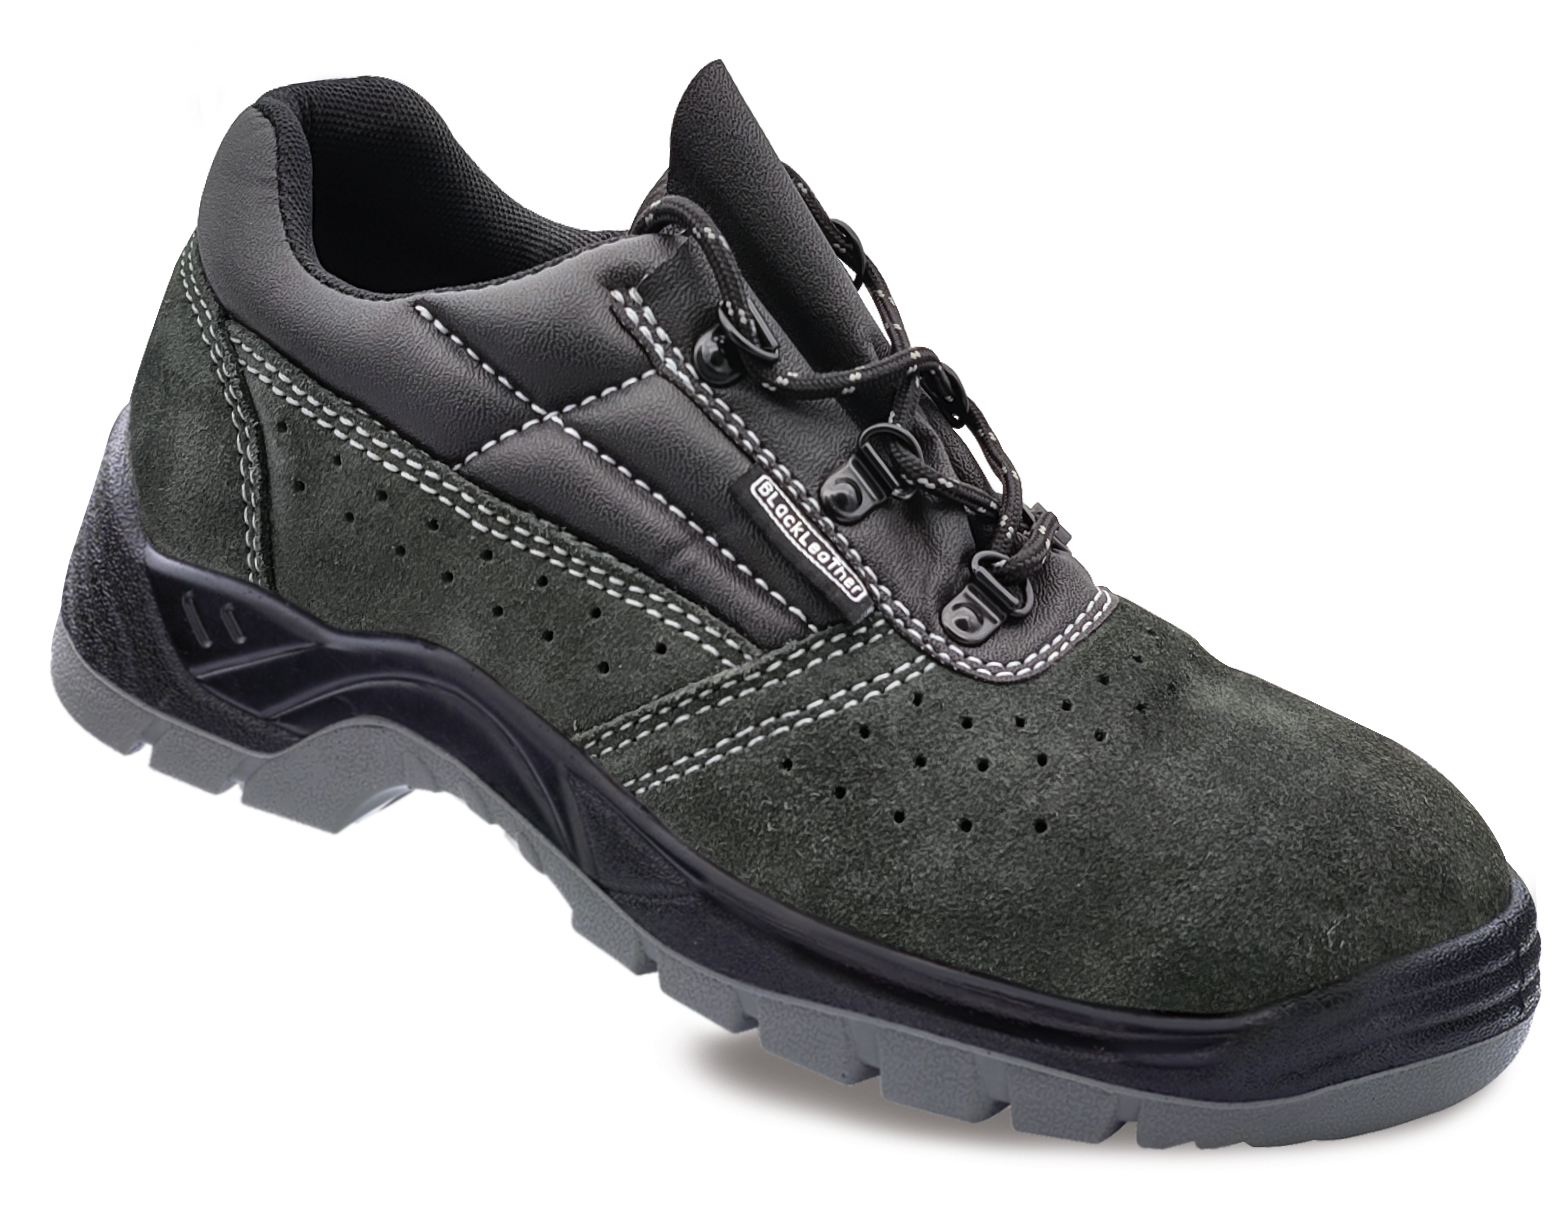 ZSECO1 Calzado de Seguridad BlackLeather Zapato mod. ZSECO1 (S1P SRC E A)